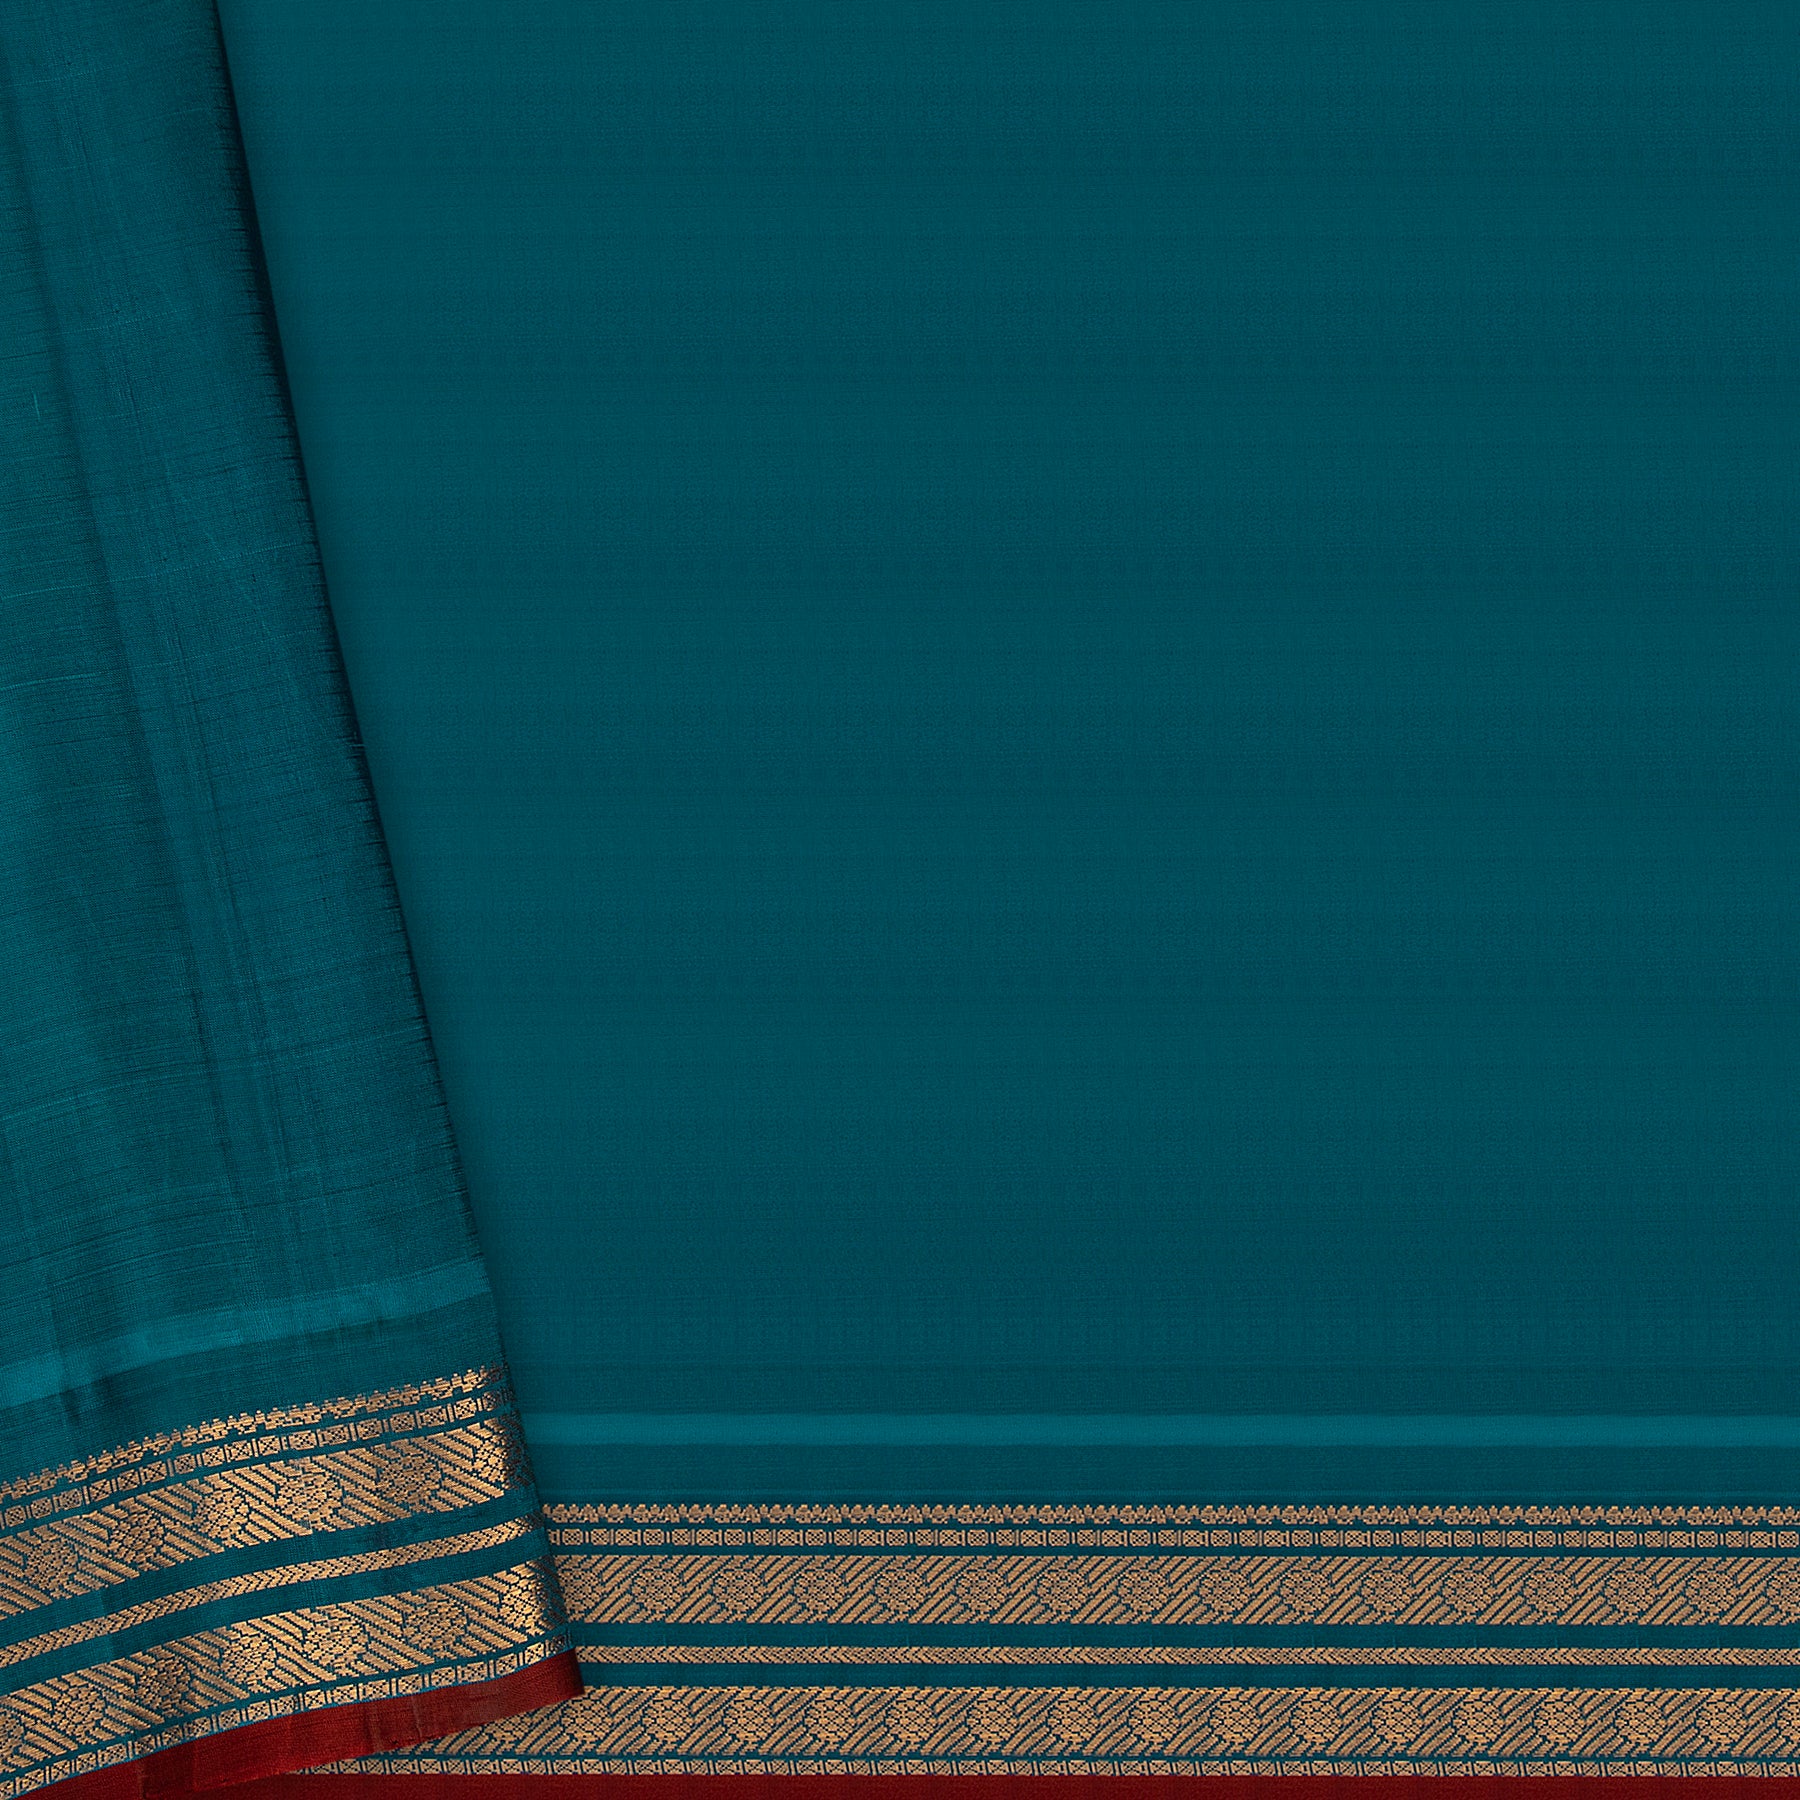 Kanakavalli Gadwal Silk/Cotton Sari 23-604-HS005-13398 - Blouse View